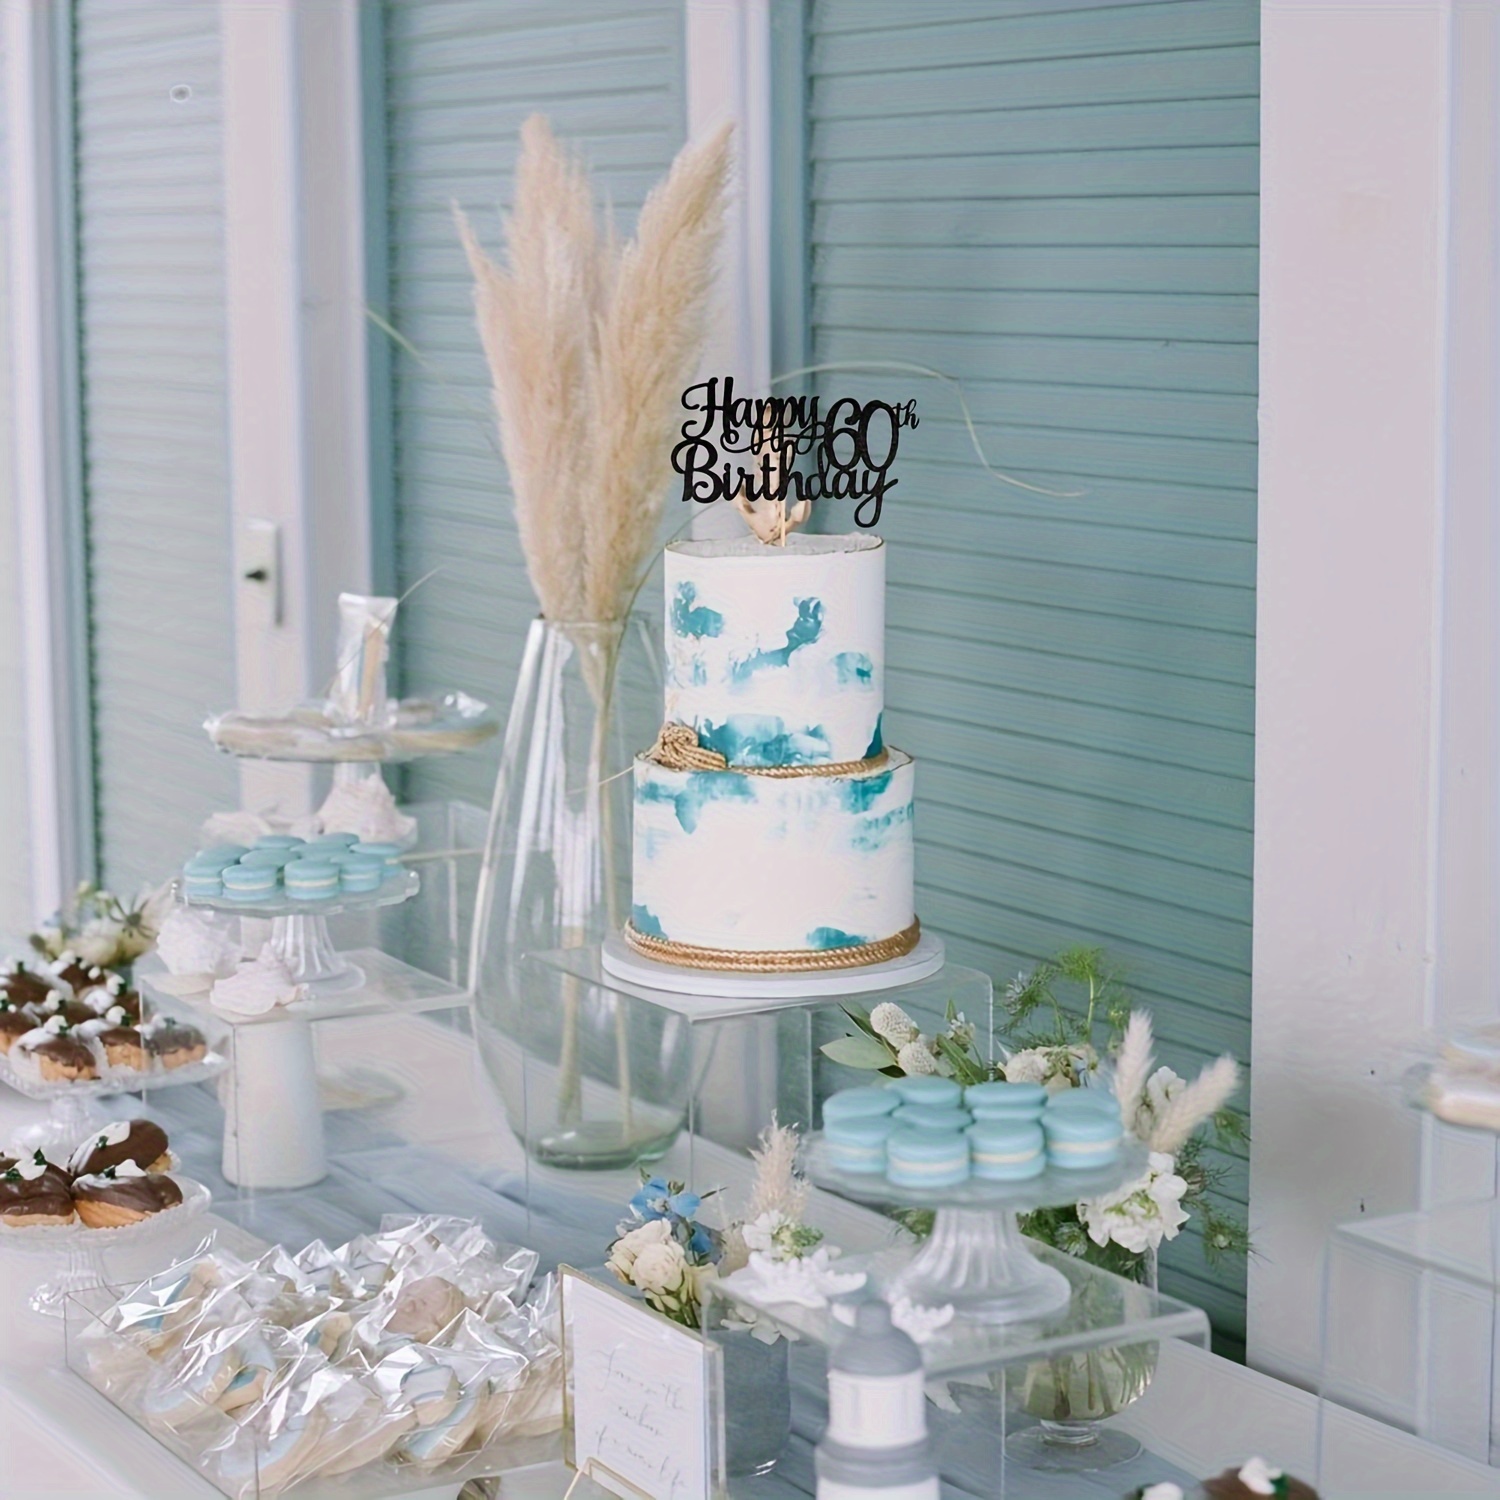 Happy Anniversary Cake Topper - Wedding Anniversary Company Anniversary  Party Decoration Supplies, Black Glitter